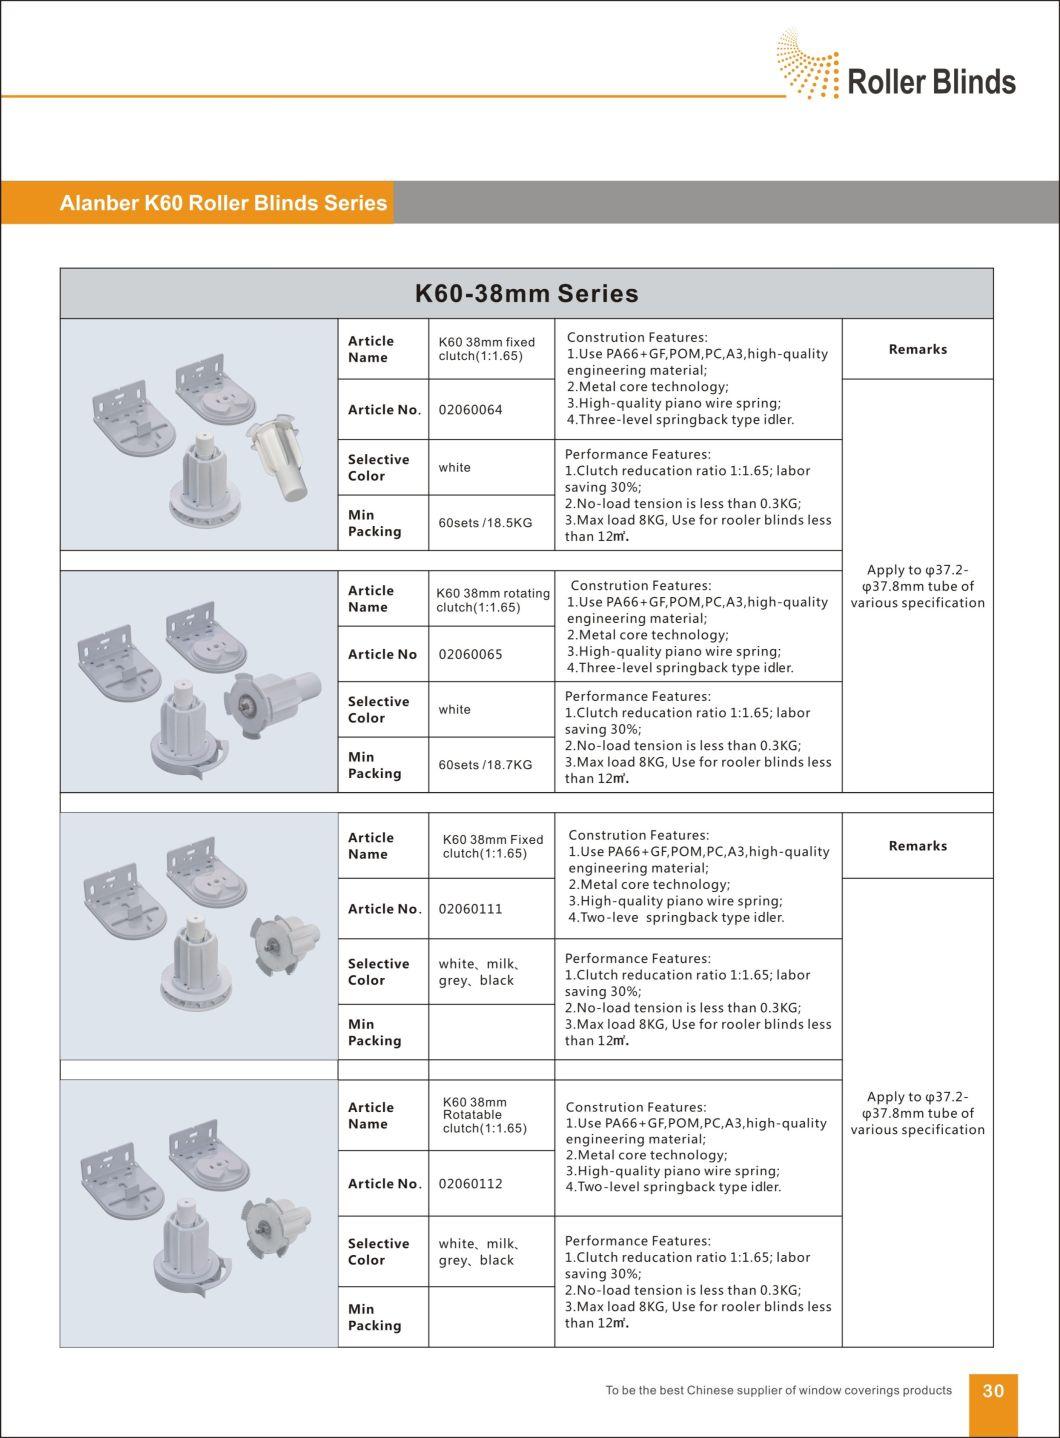 K60-38mm Rotatable Deceleration Clutch Roller Blinds Components, for Window Blinds